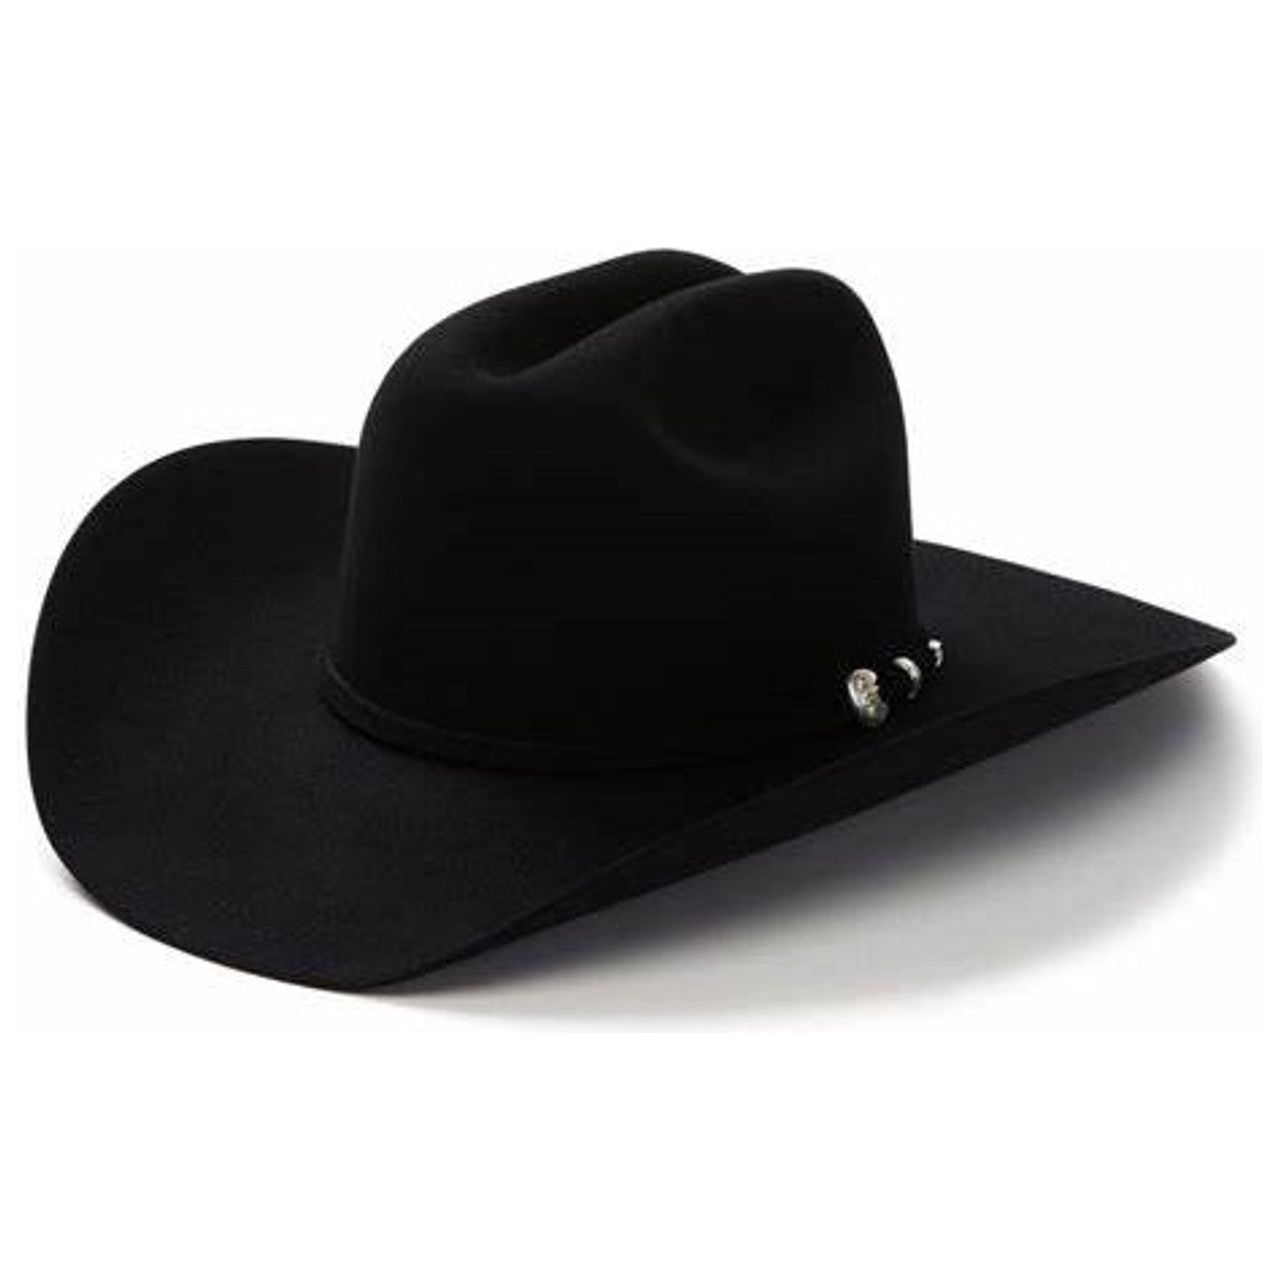 Stetson 200x La Corona Black Beaver & Cashmere Western Felt Hat